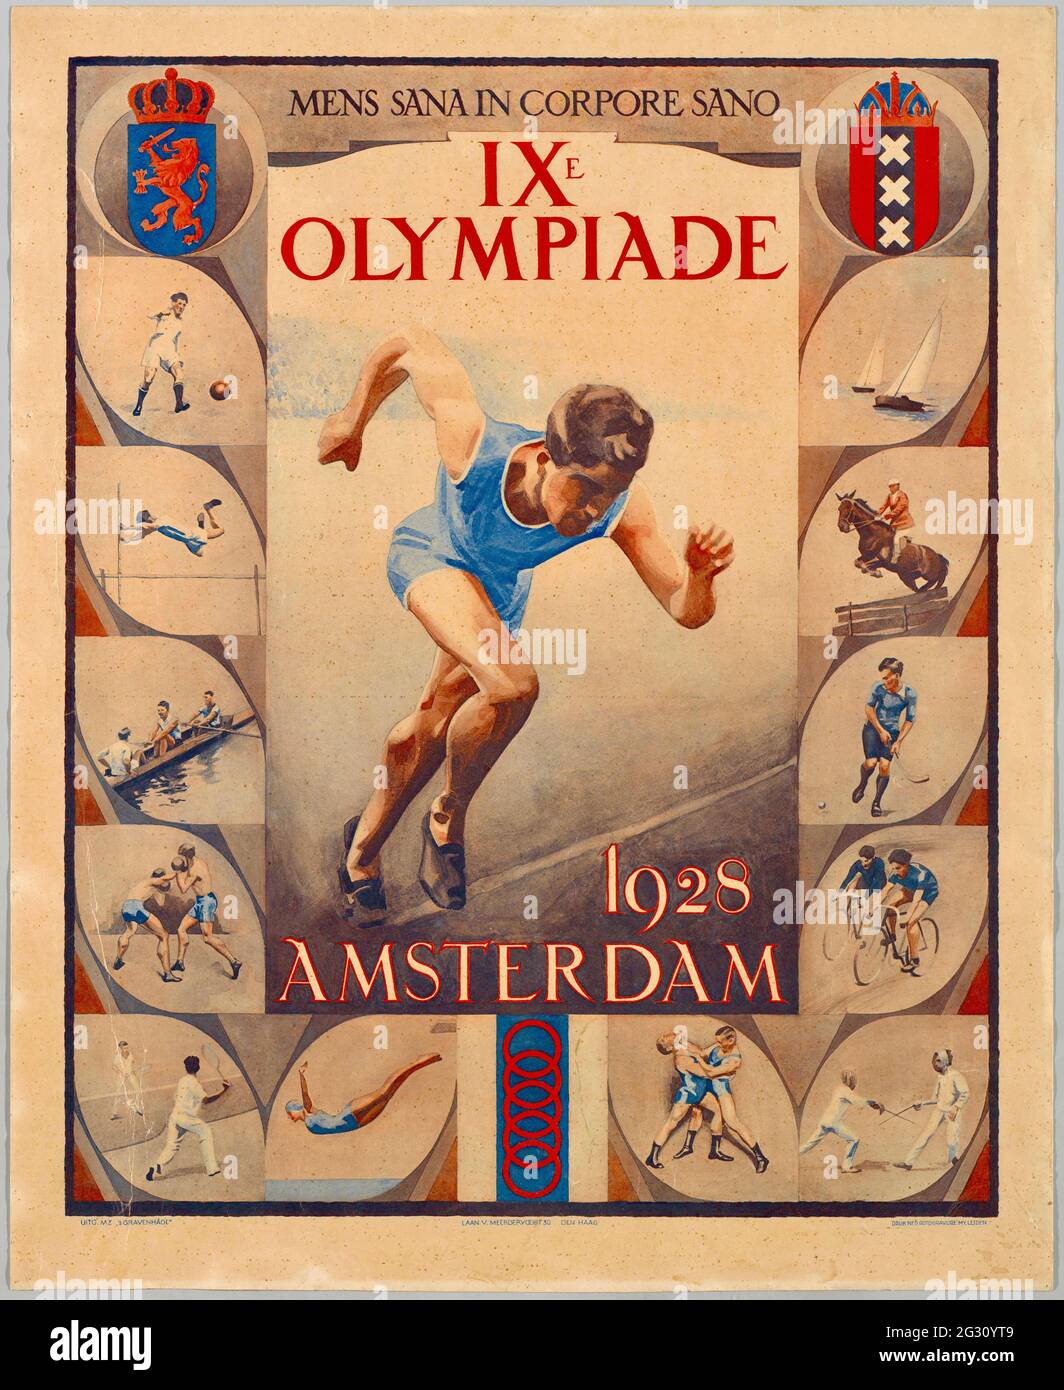 Amserdam - 1928 - Poster Olimpico d'epoca Foto Stock